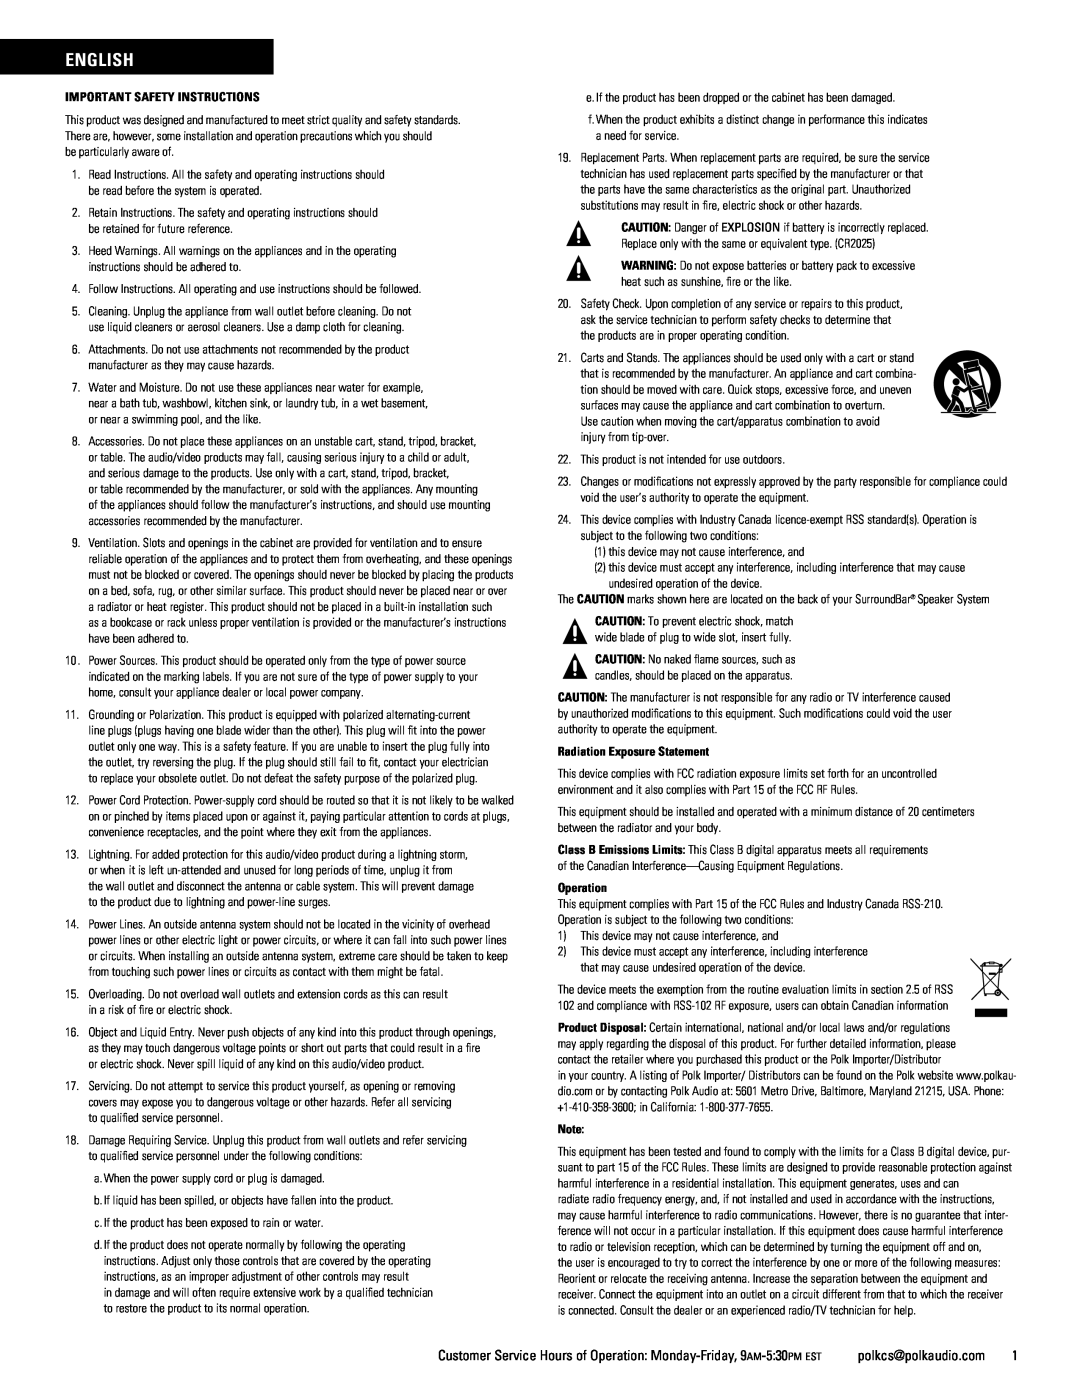 Polk Audio 6500BT manual English, Important Safety Instructions, Radiation Exposure Statement, Operation 